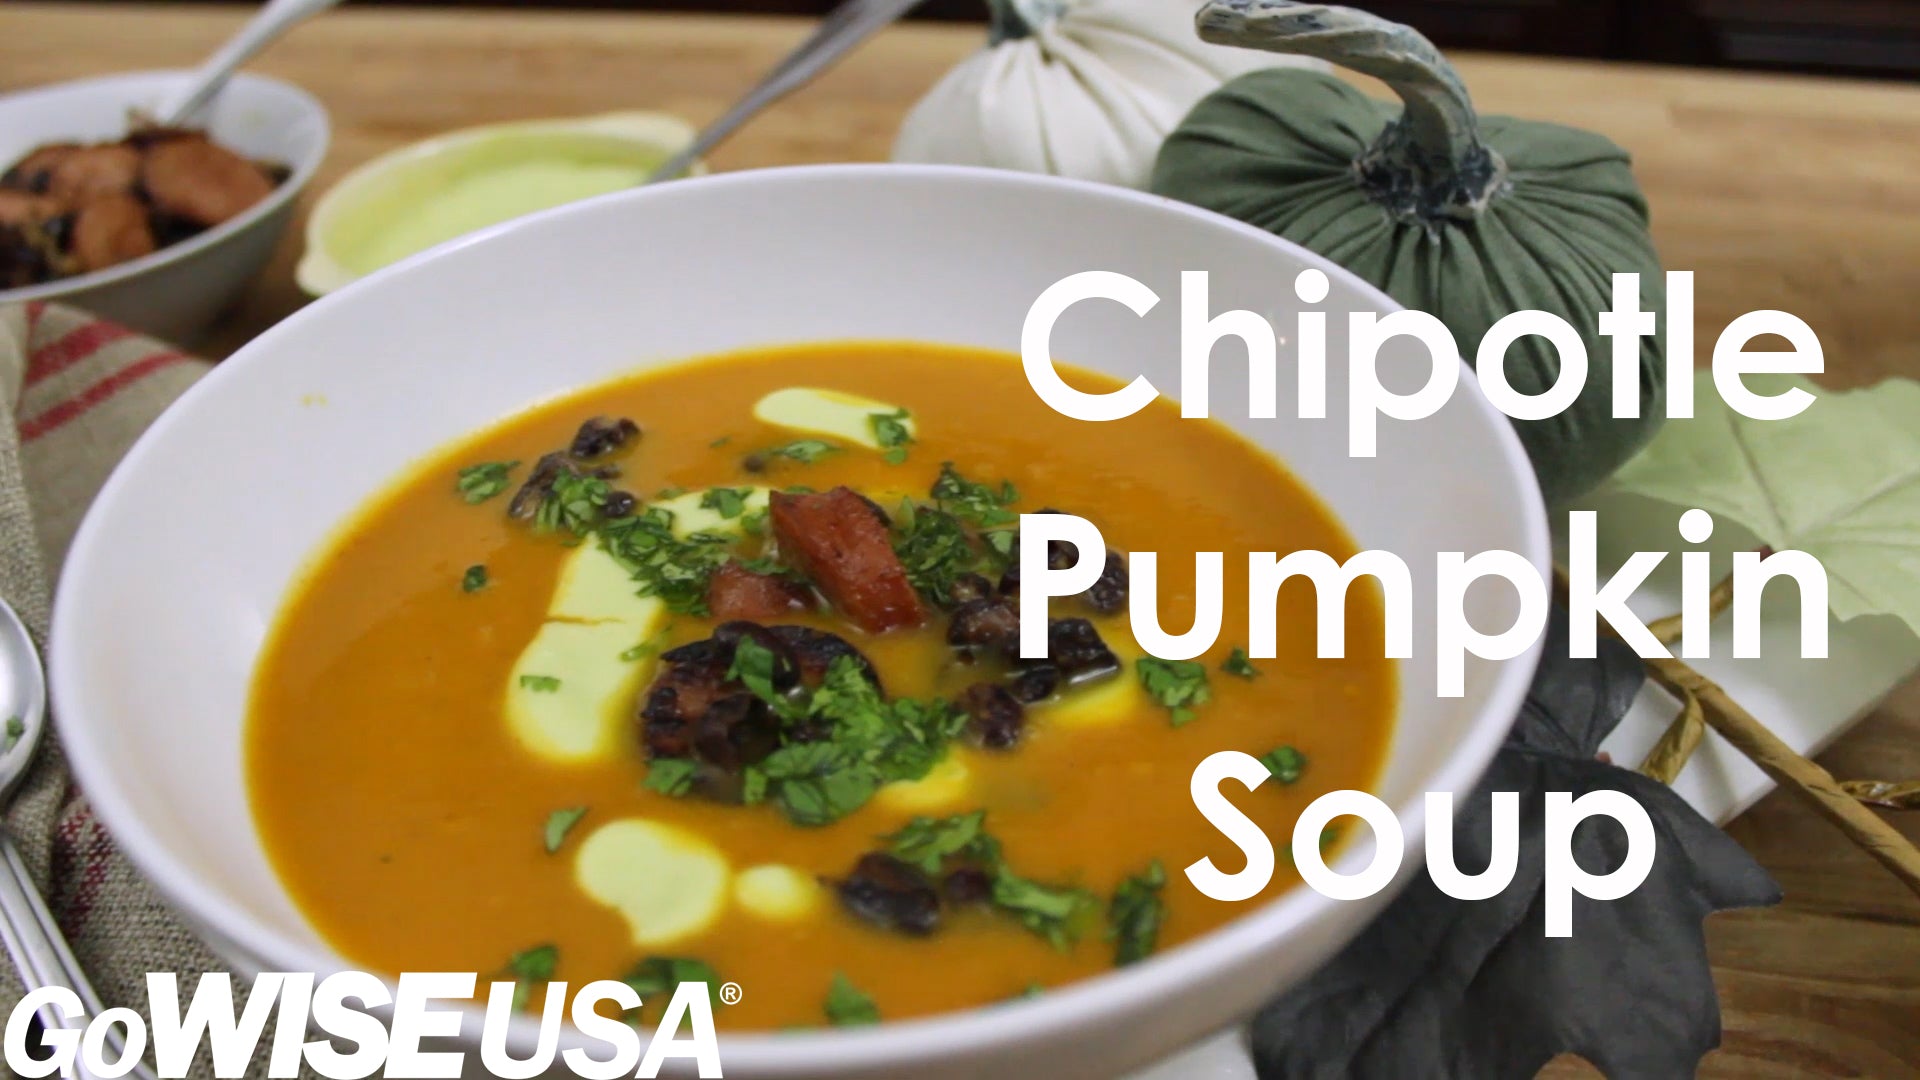 Chipotle Pumpkin Soup with Avocado Crema